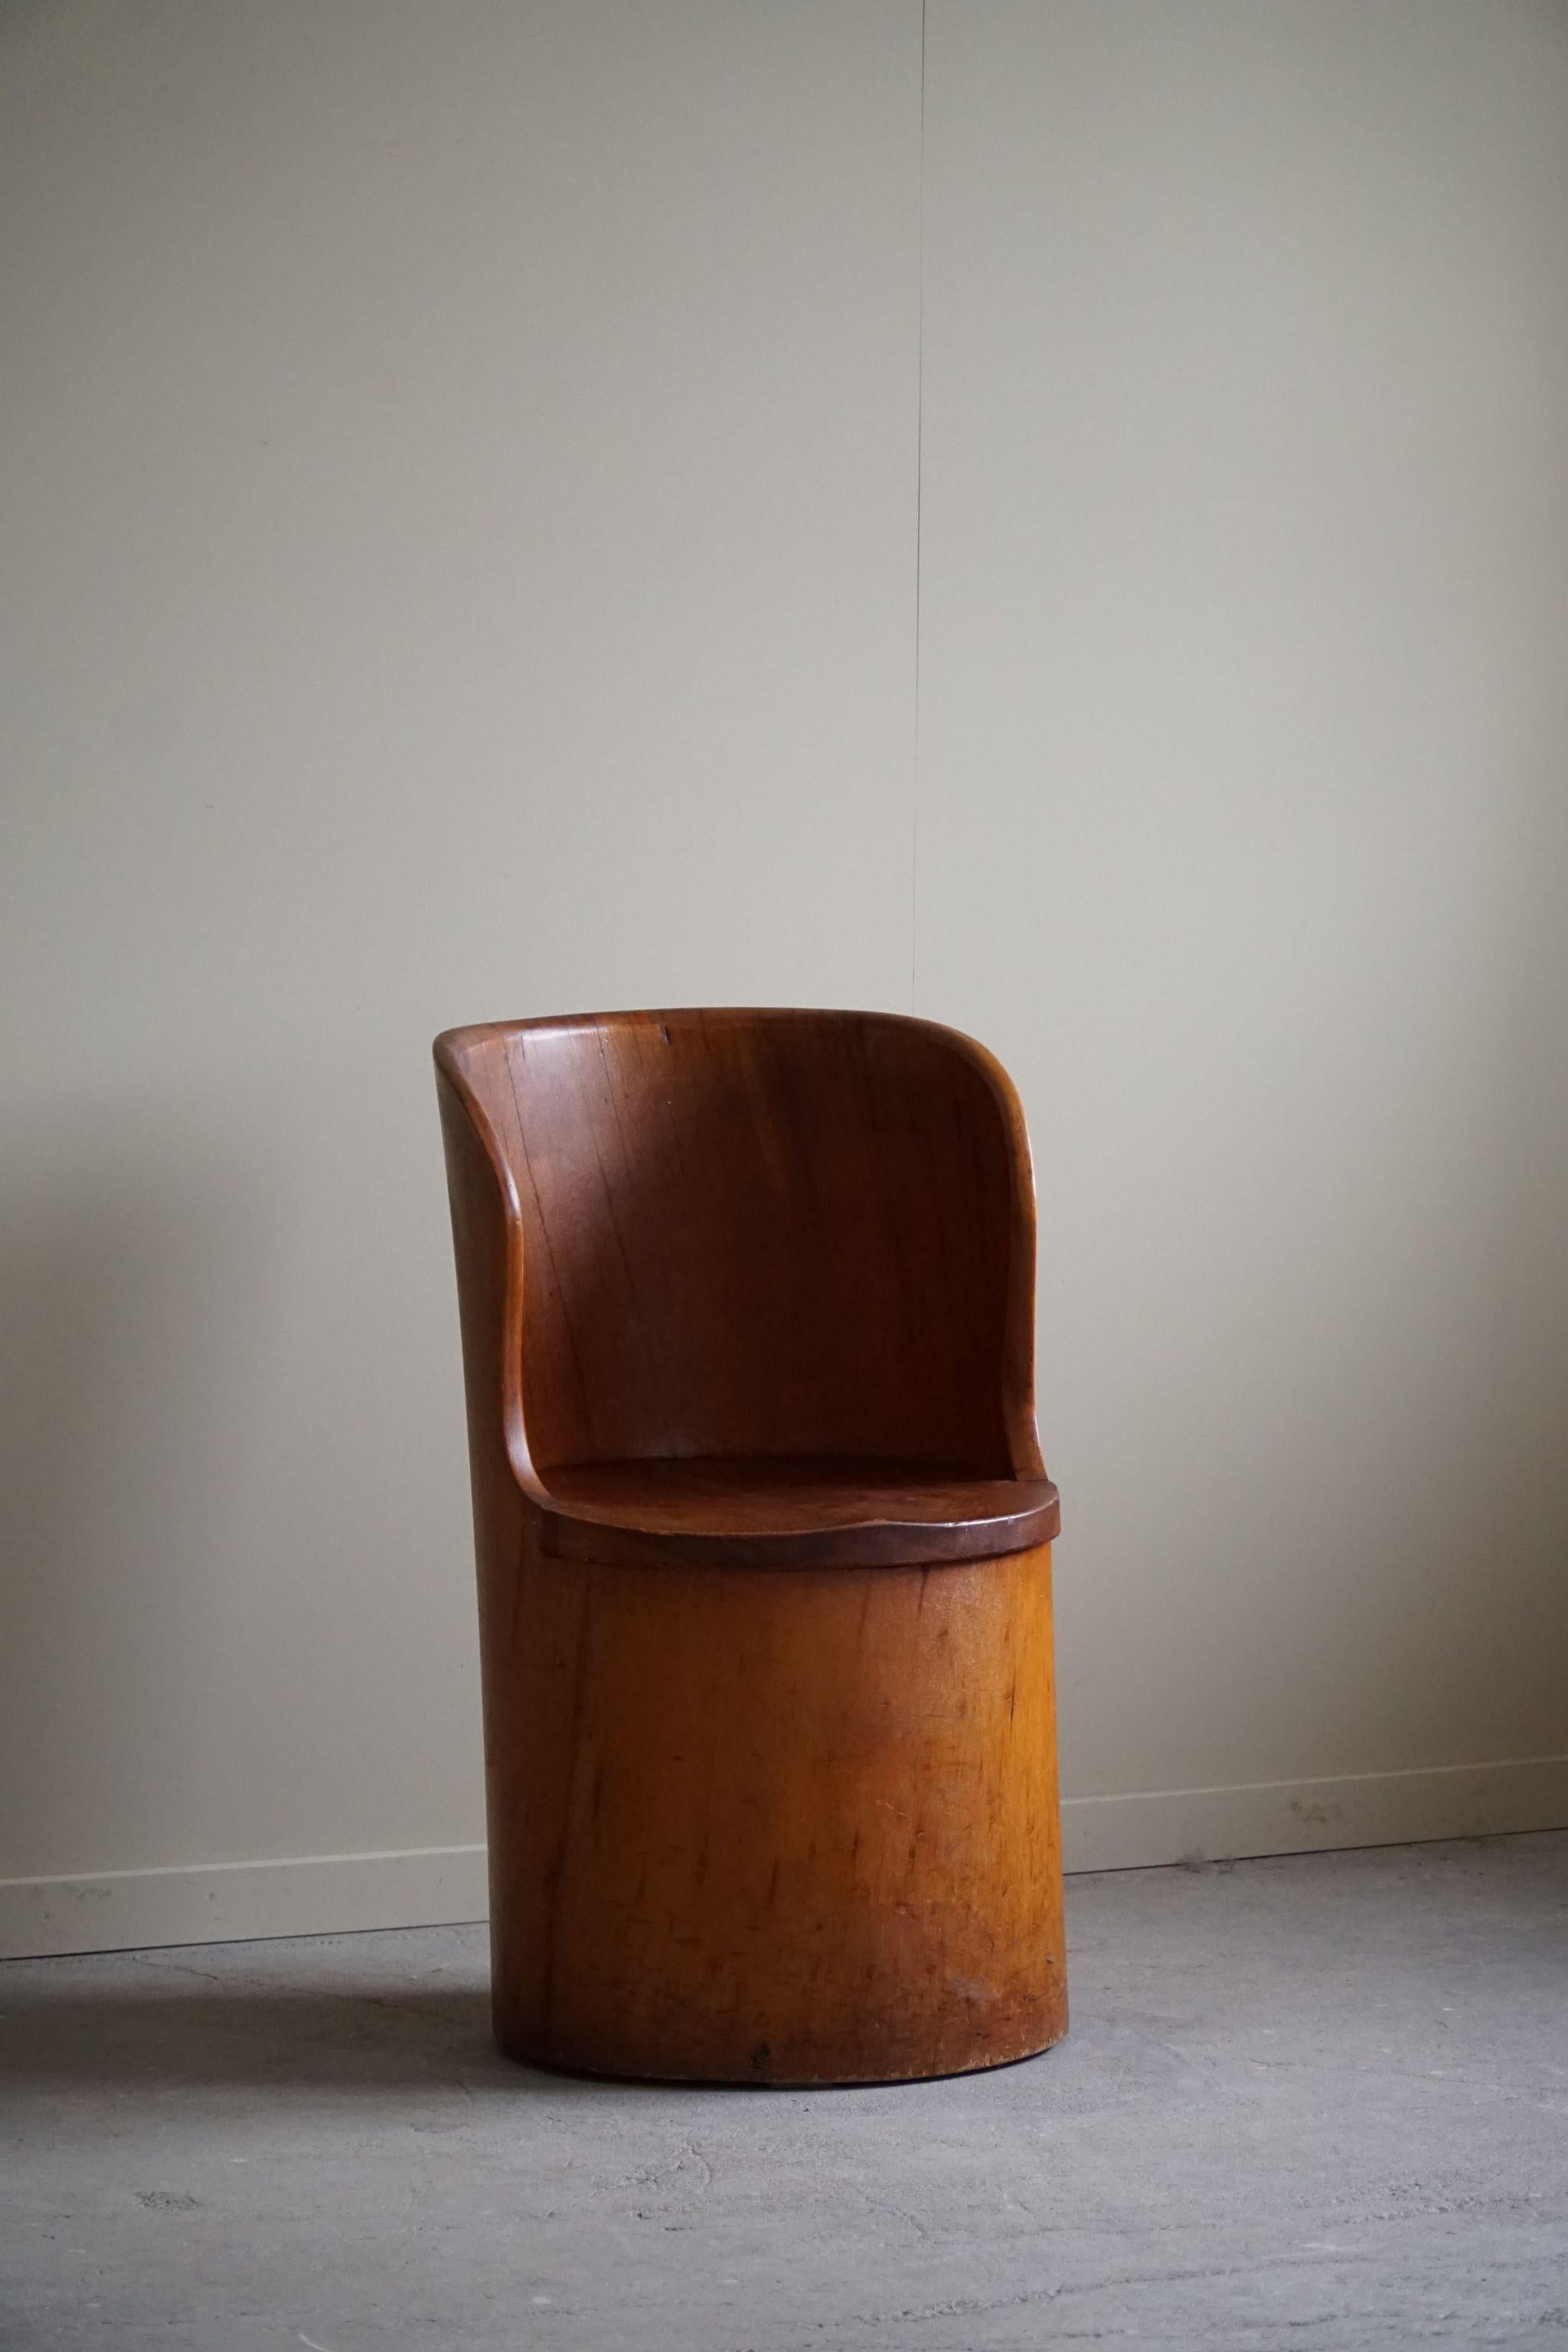  Hand Carved Primitive Stump Chair in Pine, Swedish Modern, Wabi Sabi, 1960s For Sale 4